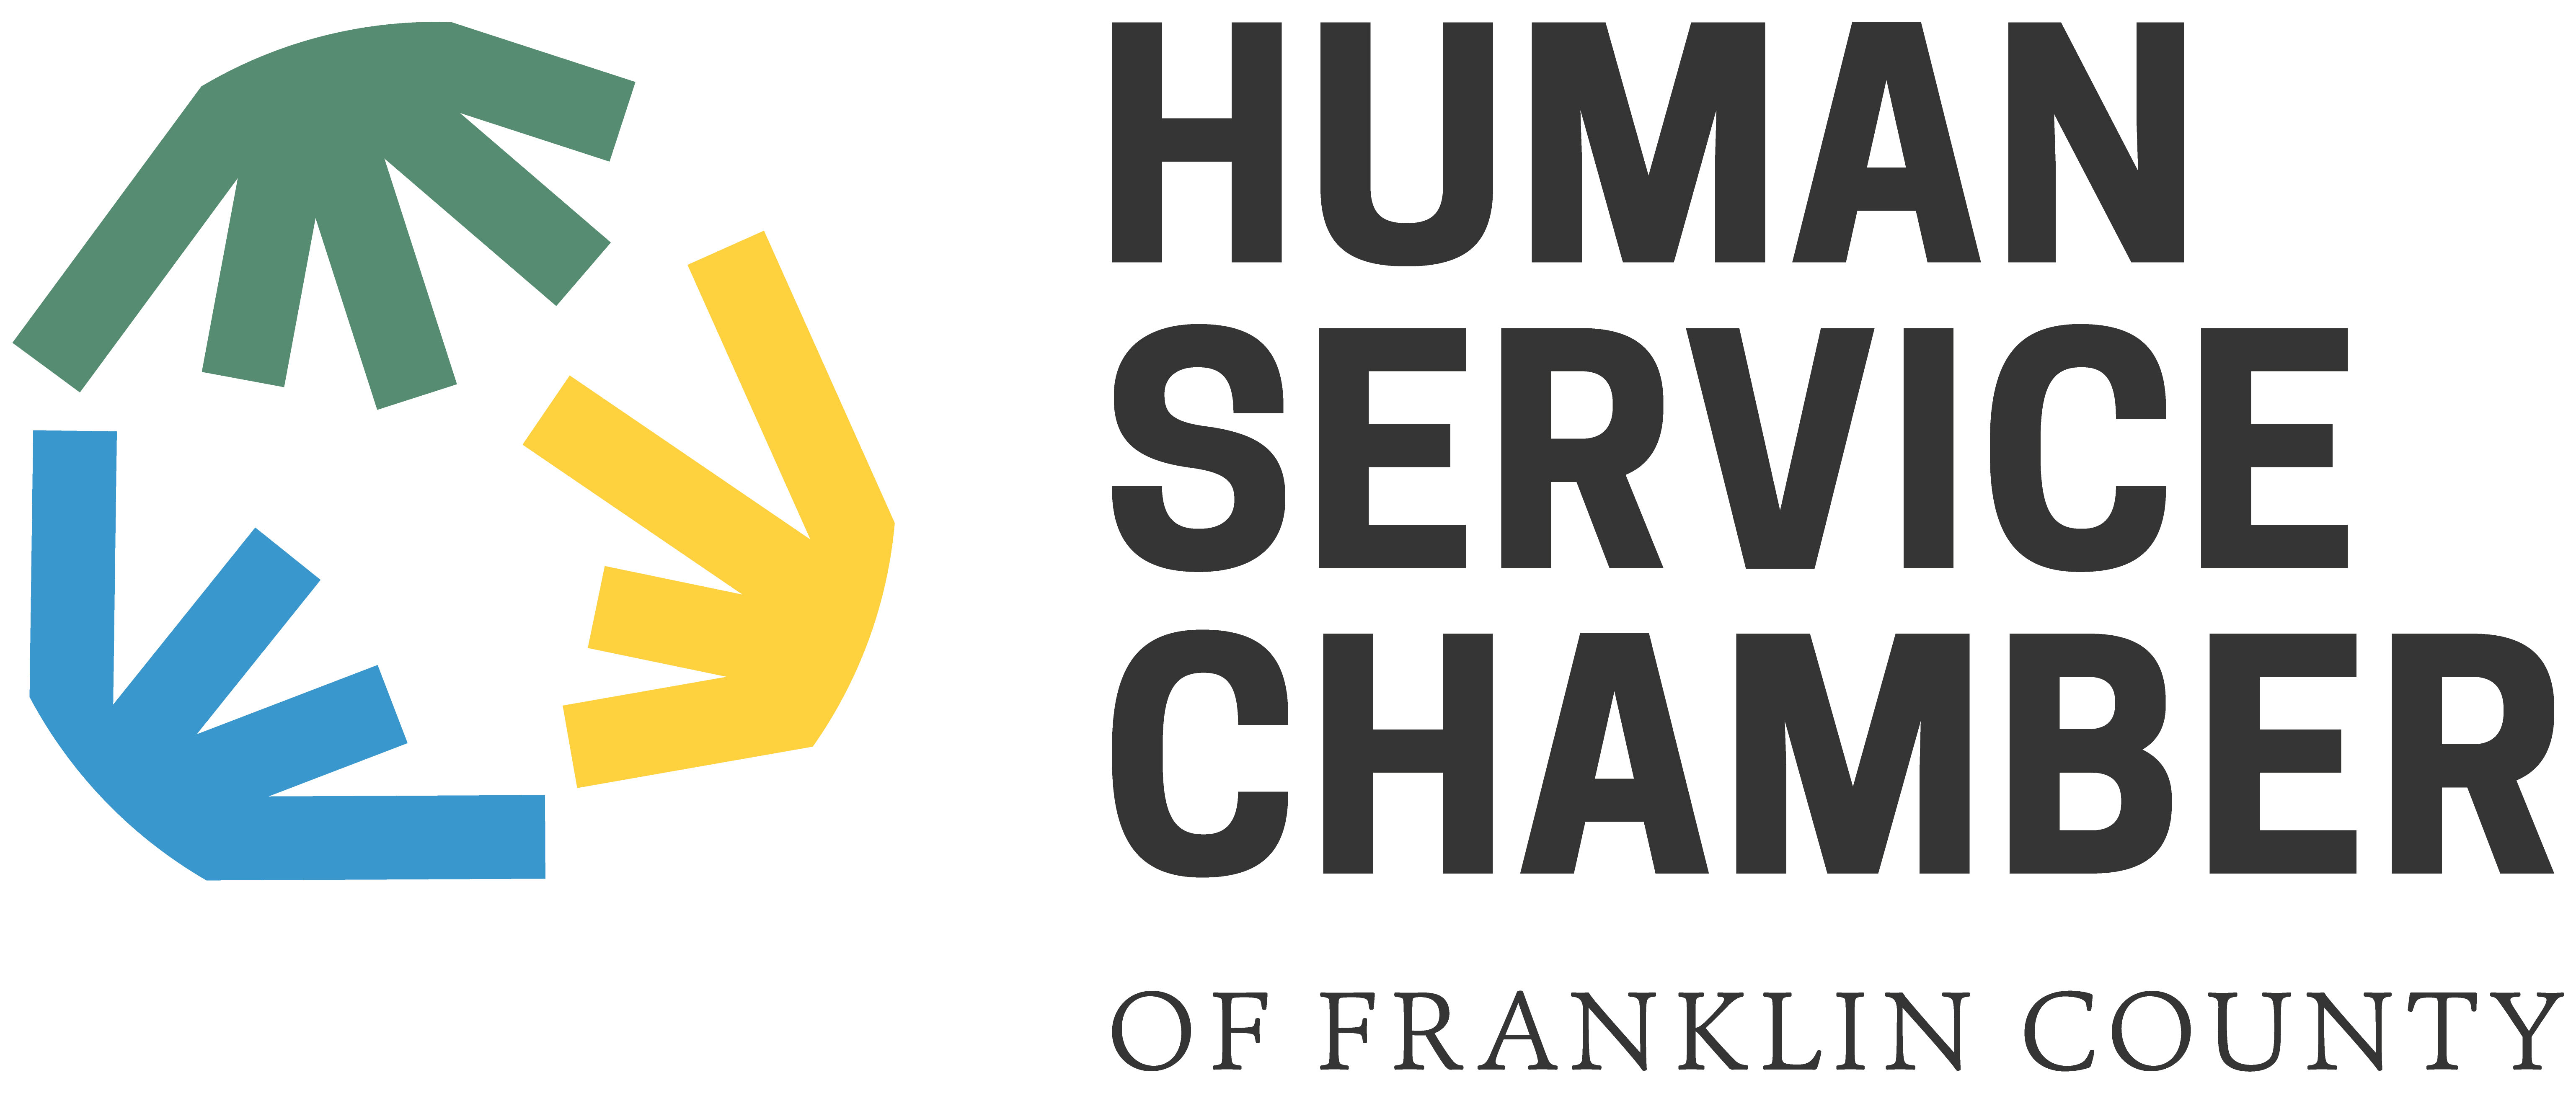 Human Service Chamber